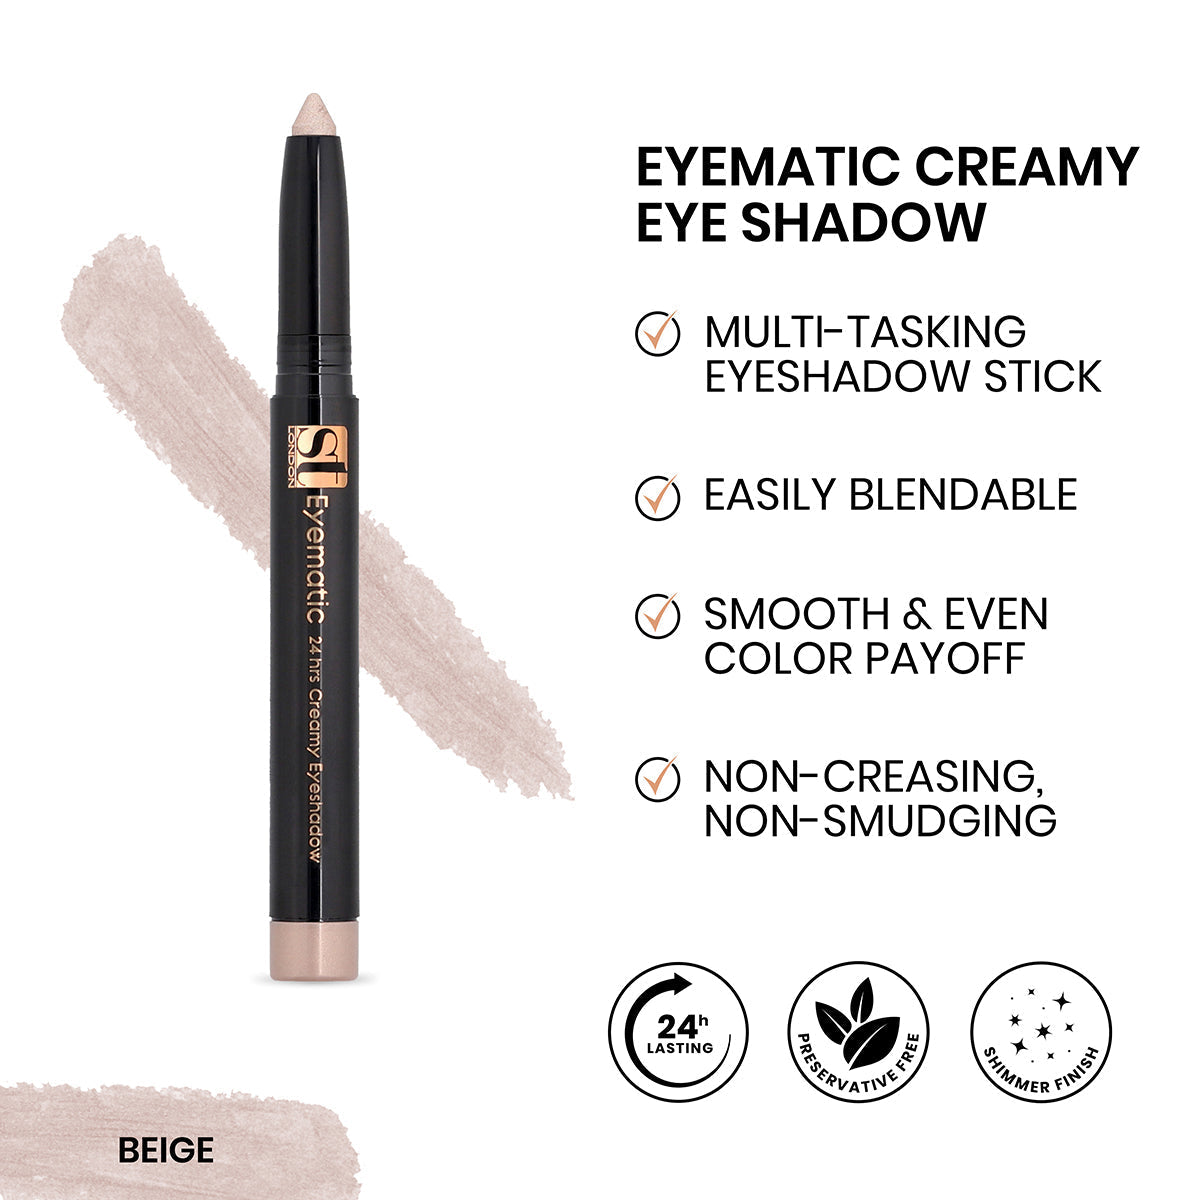 Buy  ST London - Eyematic Creamy Eye Shadow - Beige at Best Price Online in Pakistan